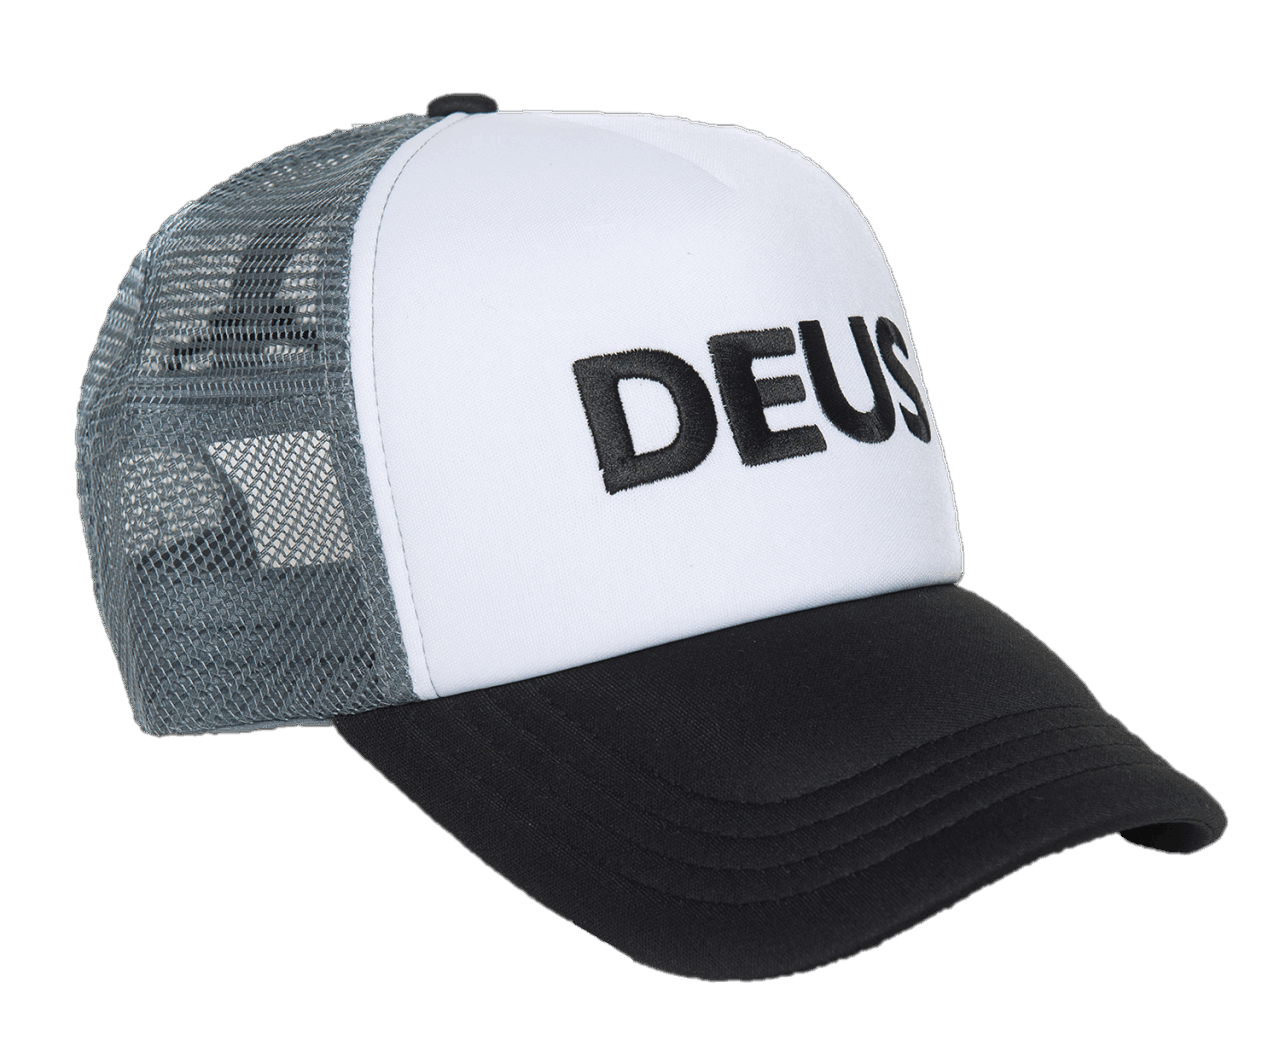 Deus Caps Trucker - black / white / gray